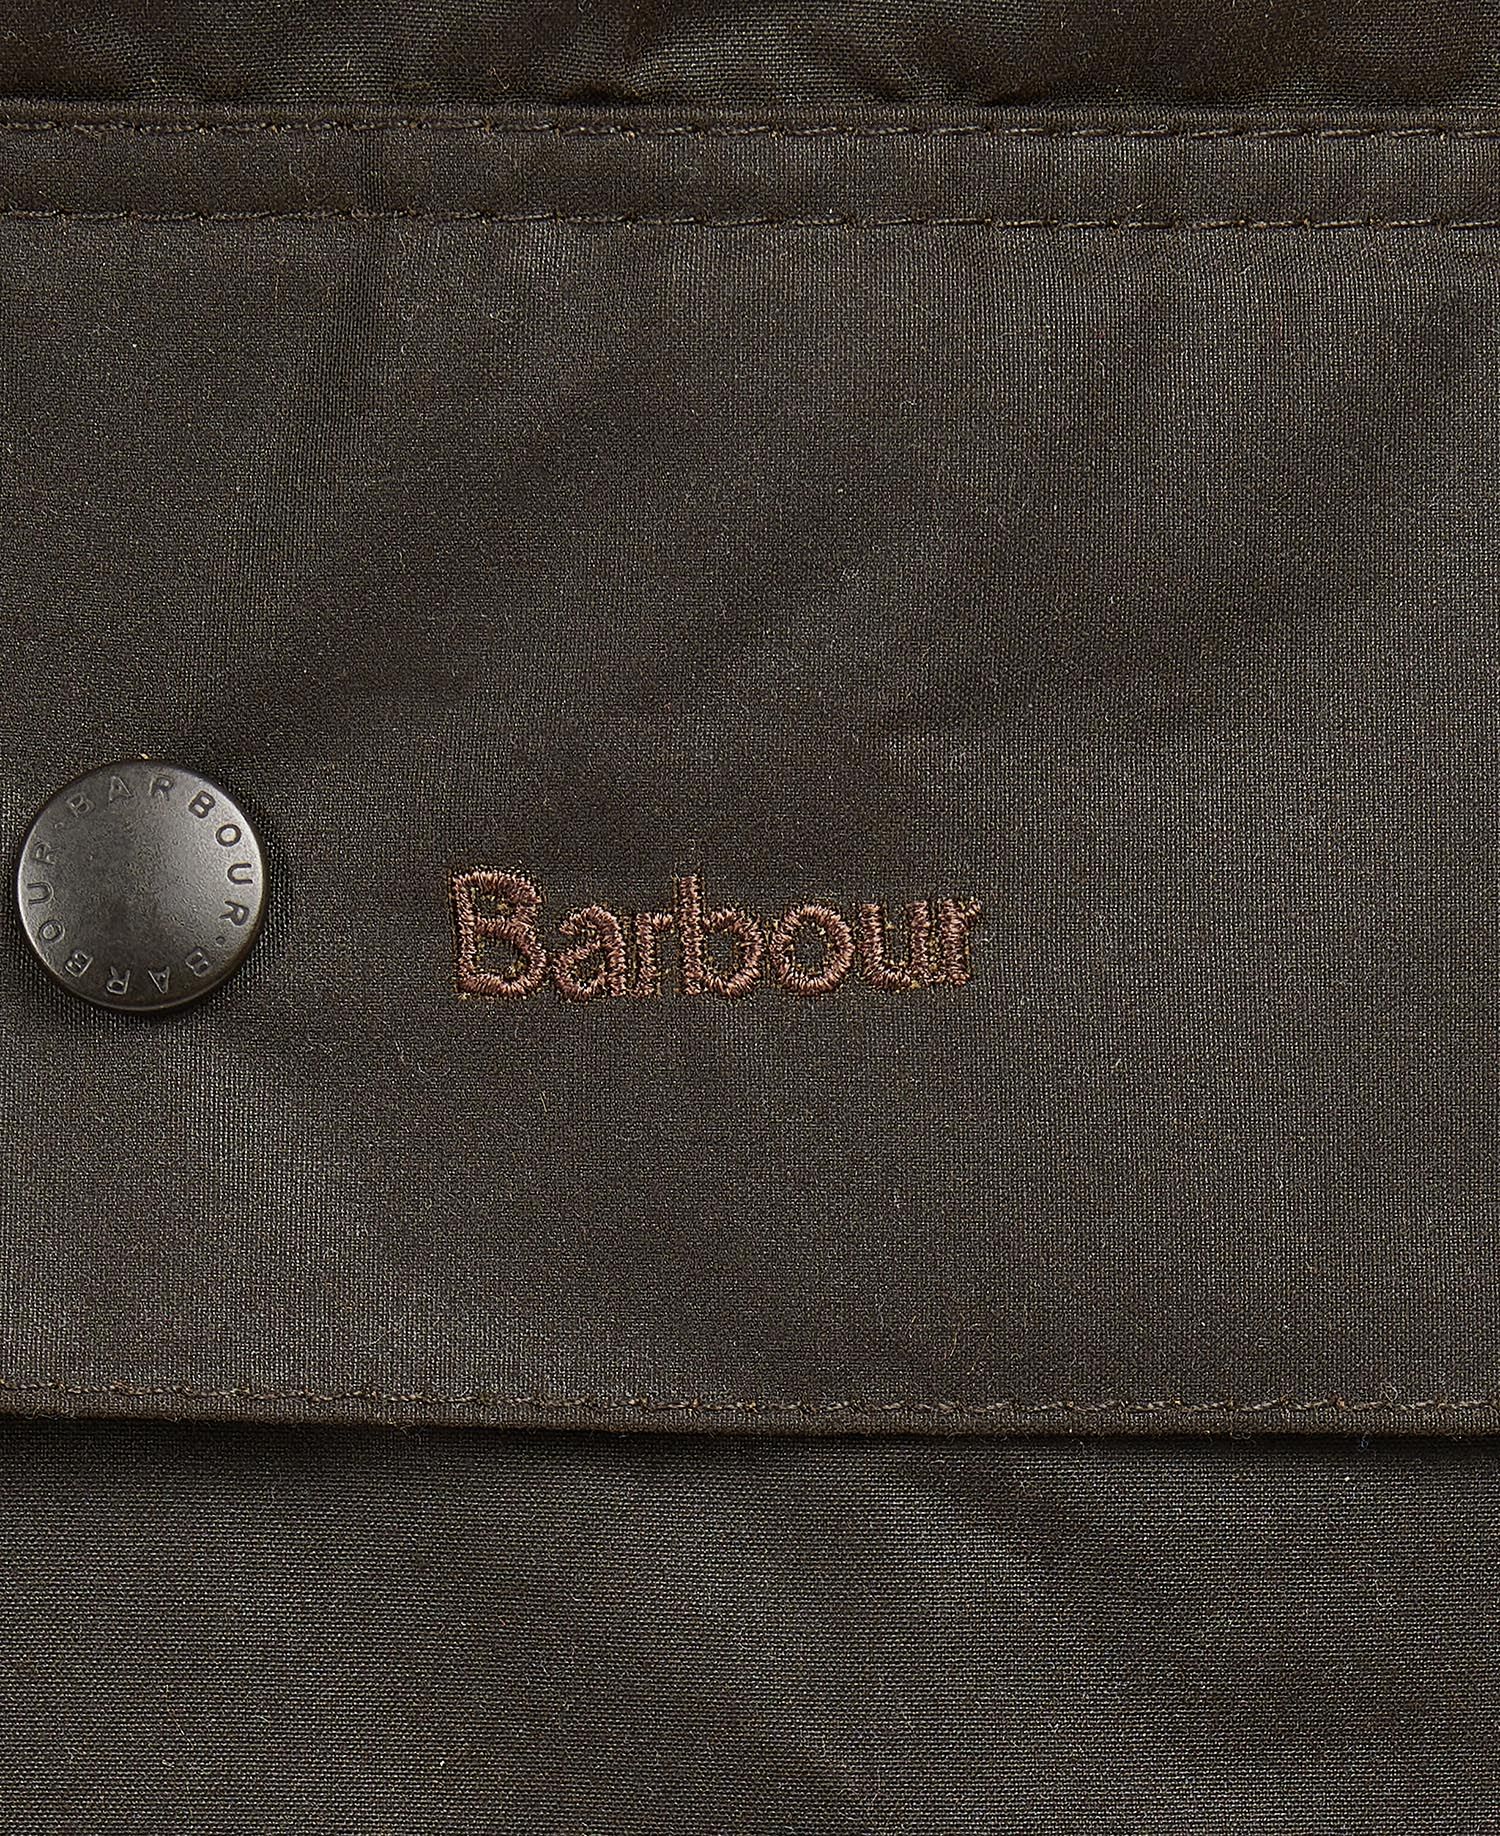 Barbour Classic Beaufort Wax Jacket Olive